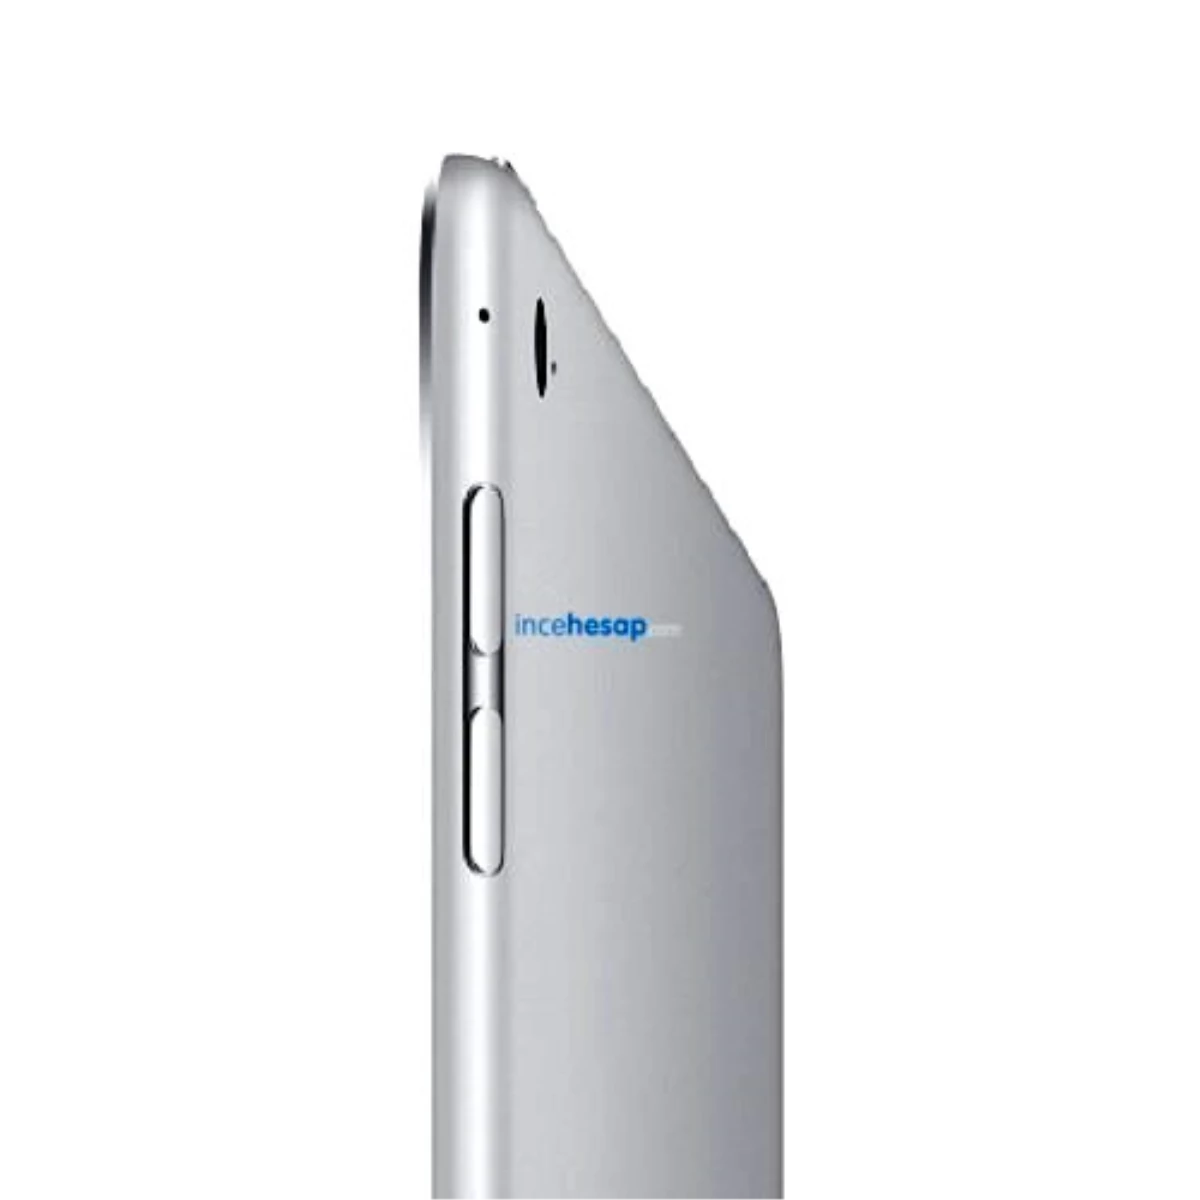 Apple İpad Air2 16gb Wi-Fi + 4g Gümüş Tablet (Mgh72tu/a)